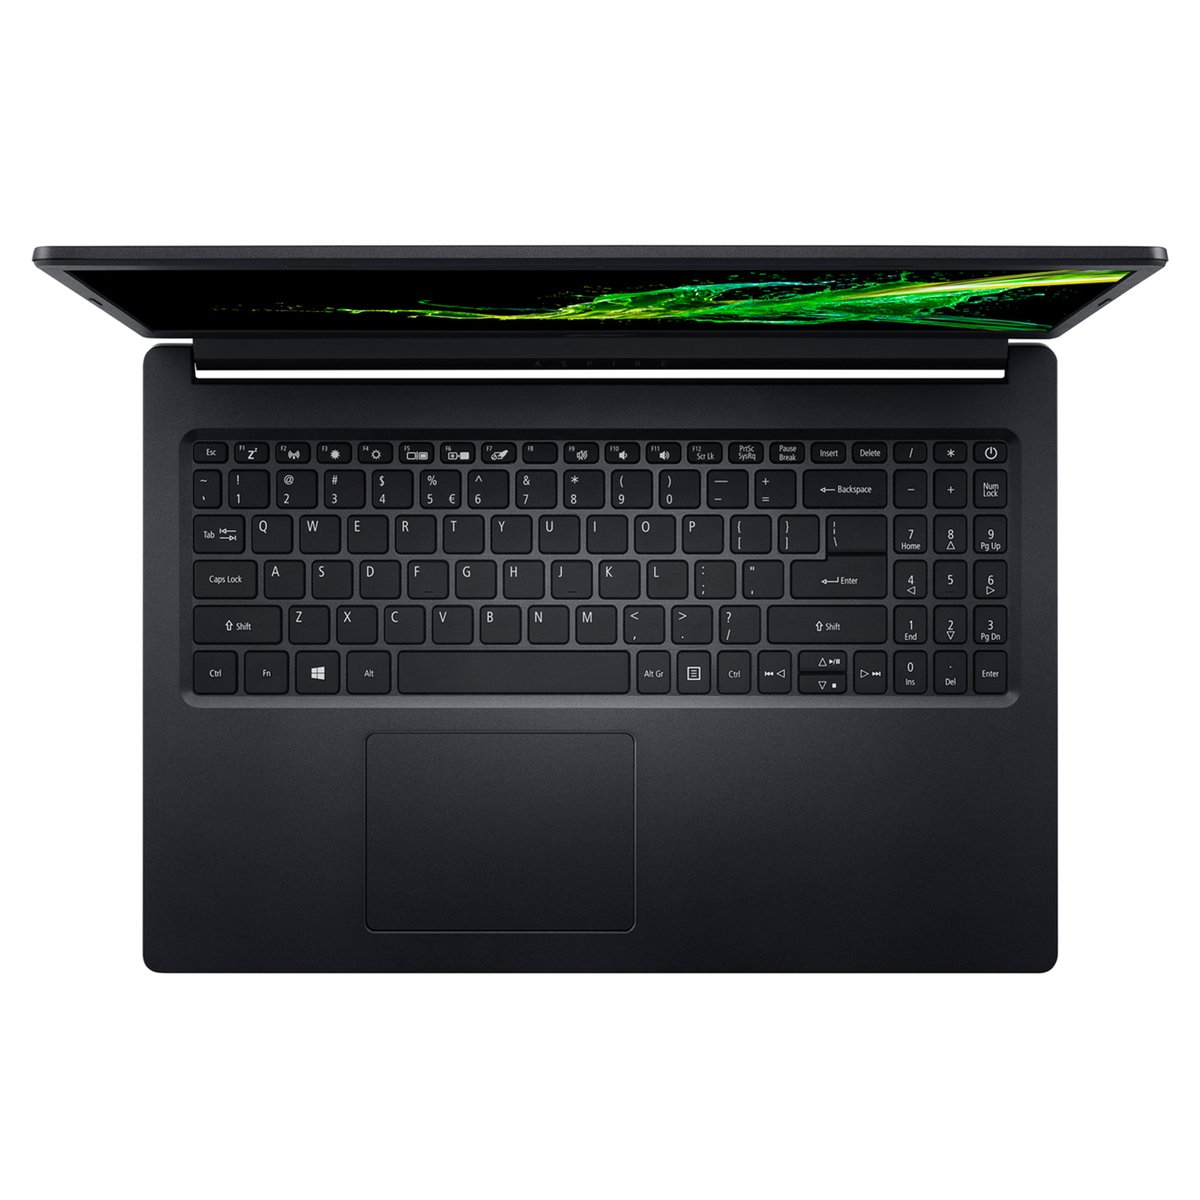 Acer Notebook A515 Black